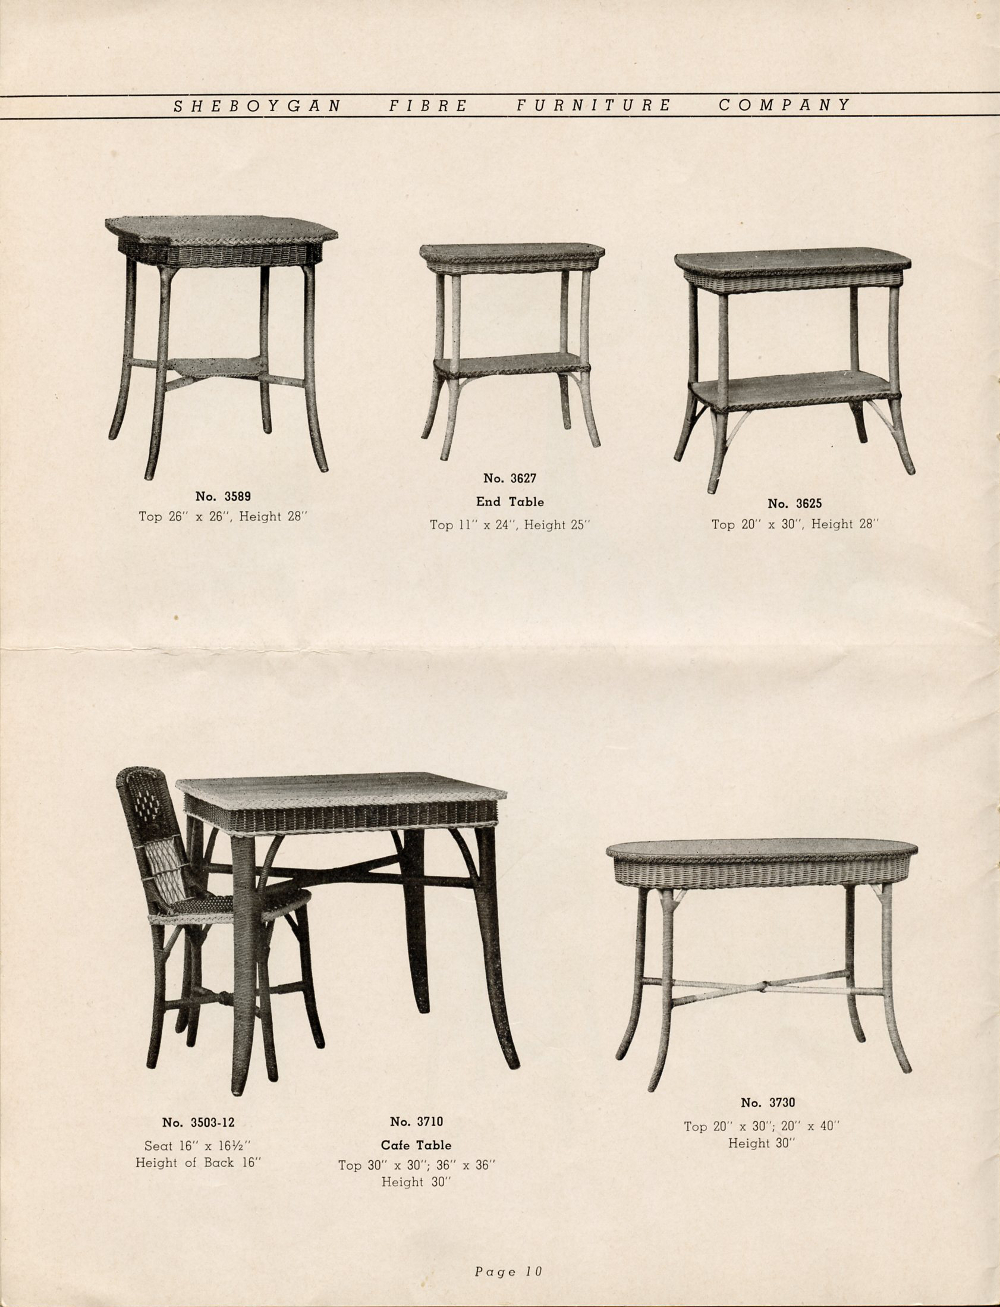 1942 Sheboygan Fibre Furniture Company Catalogue, Page 10